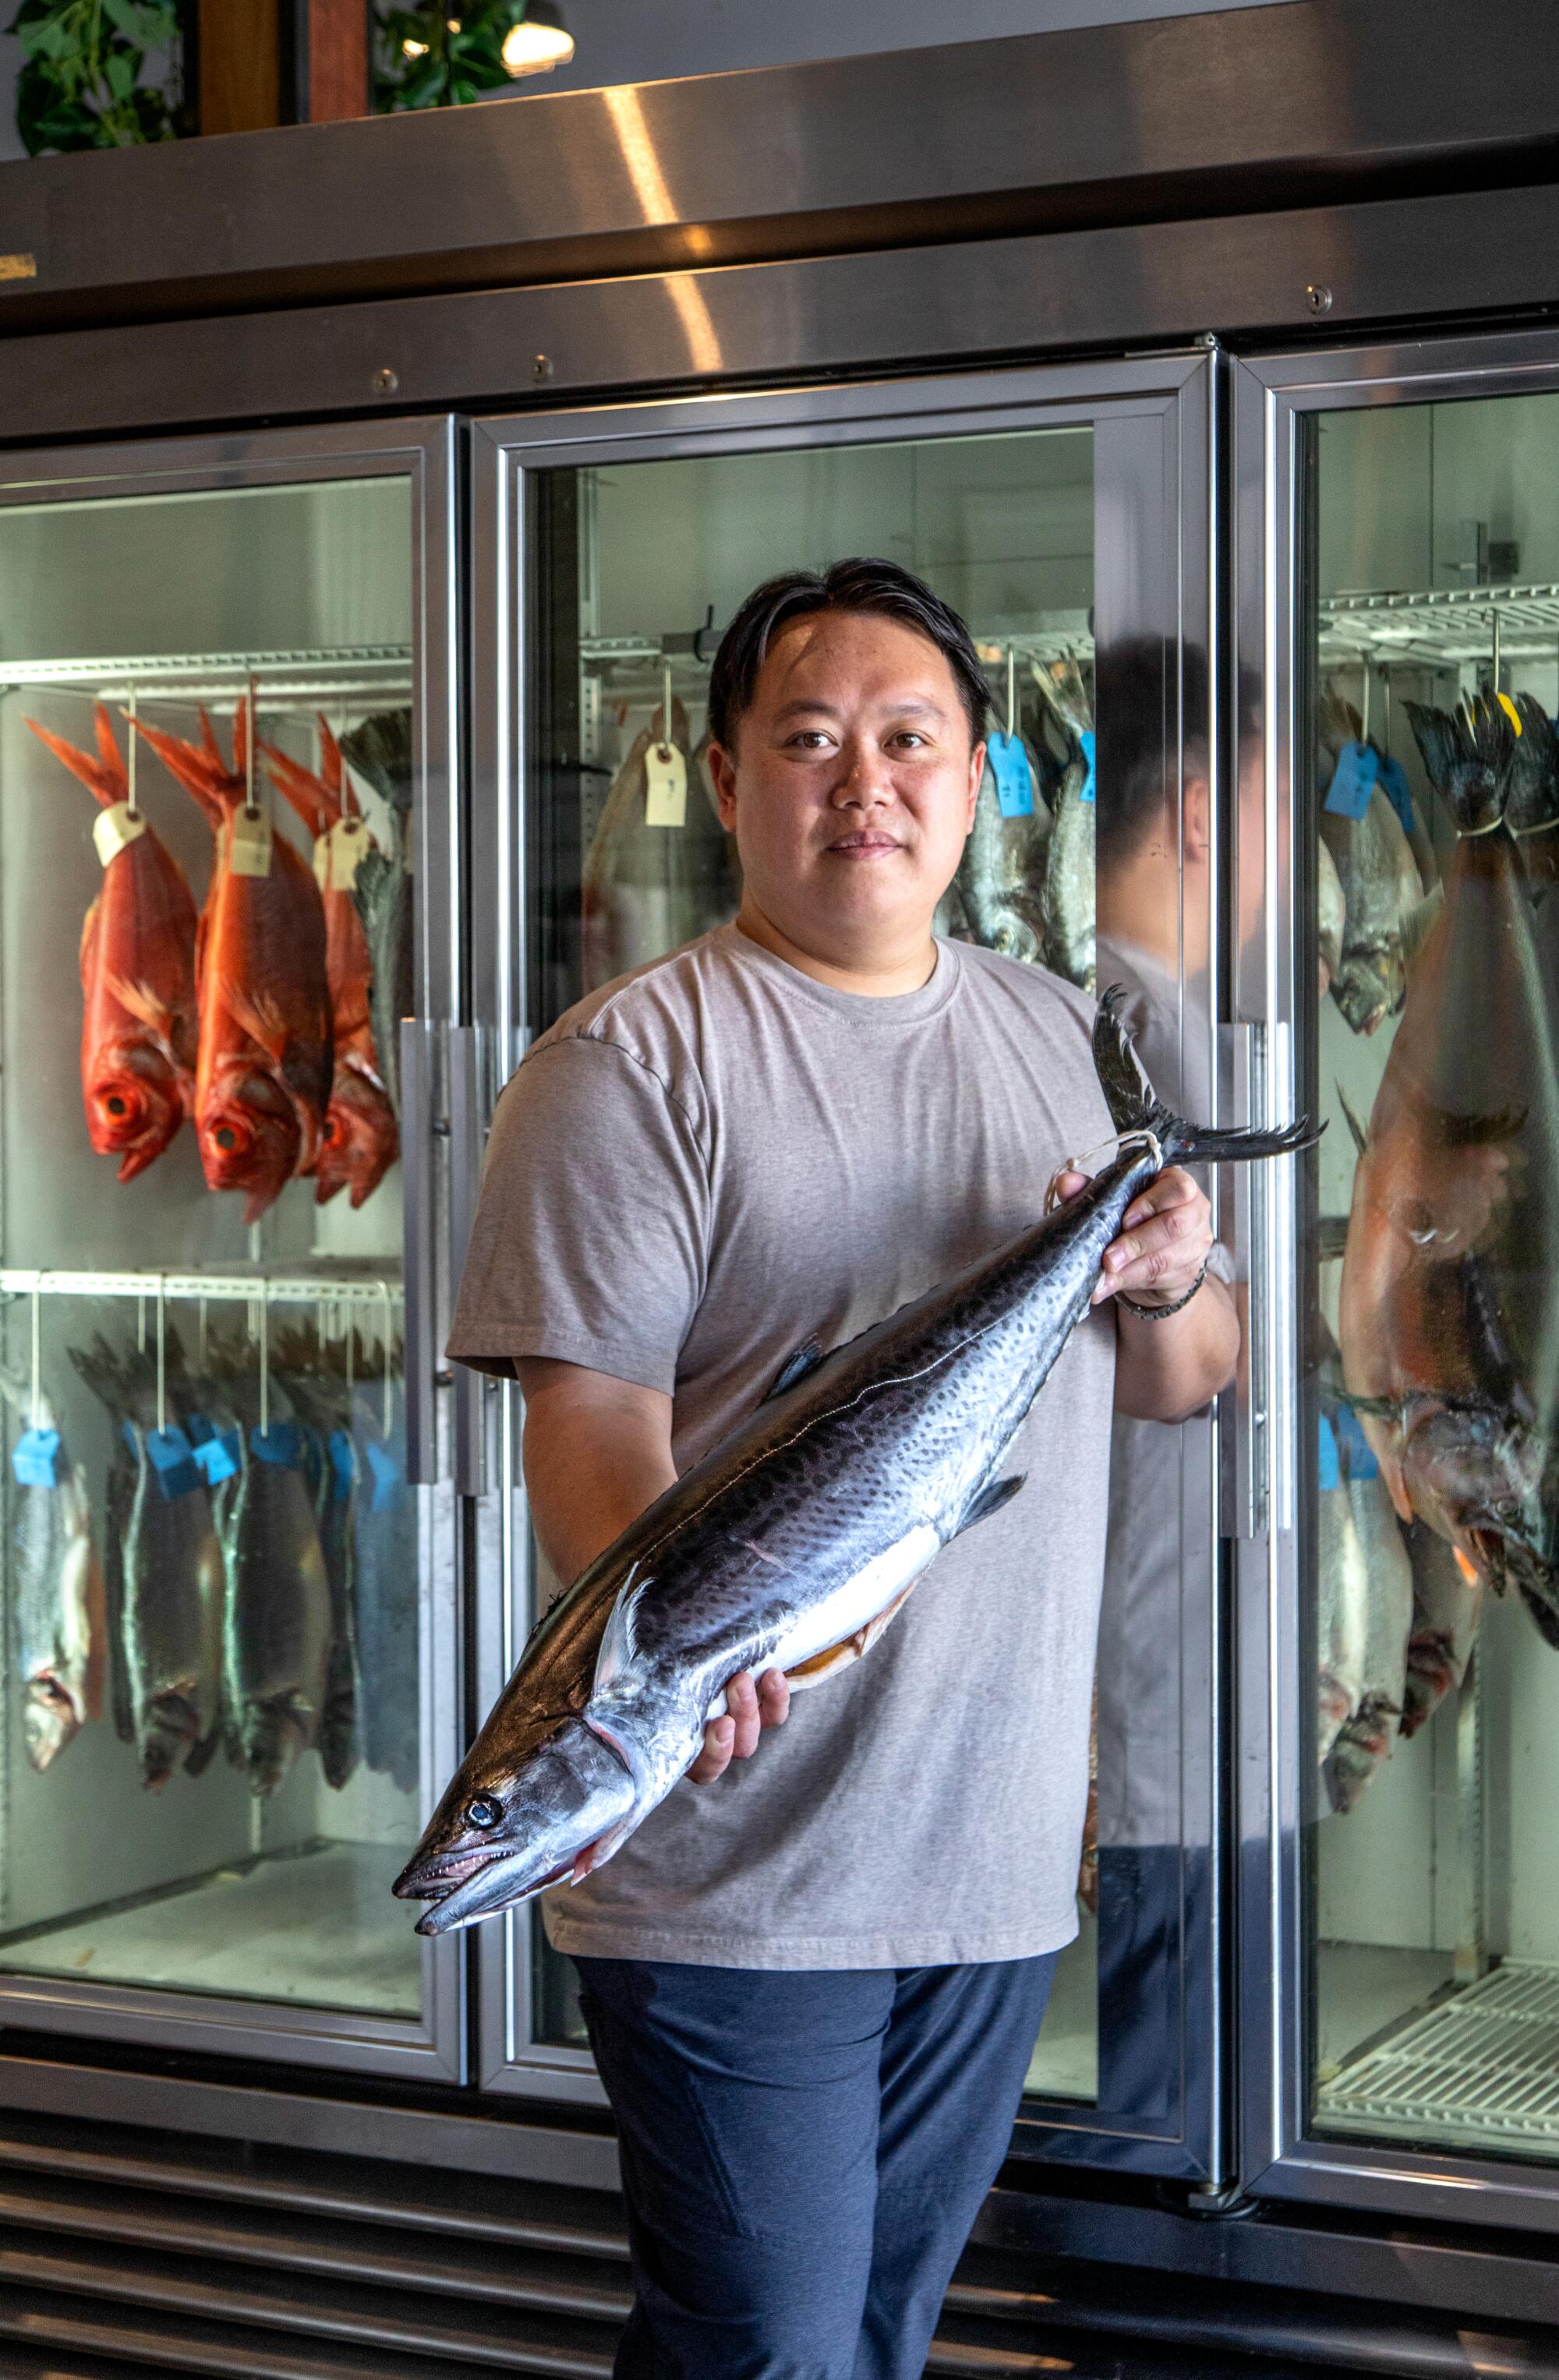 A man holds a whole mackerel at a fish market.